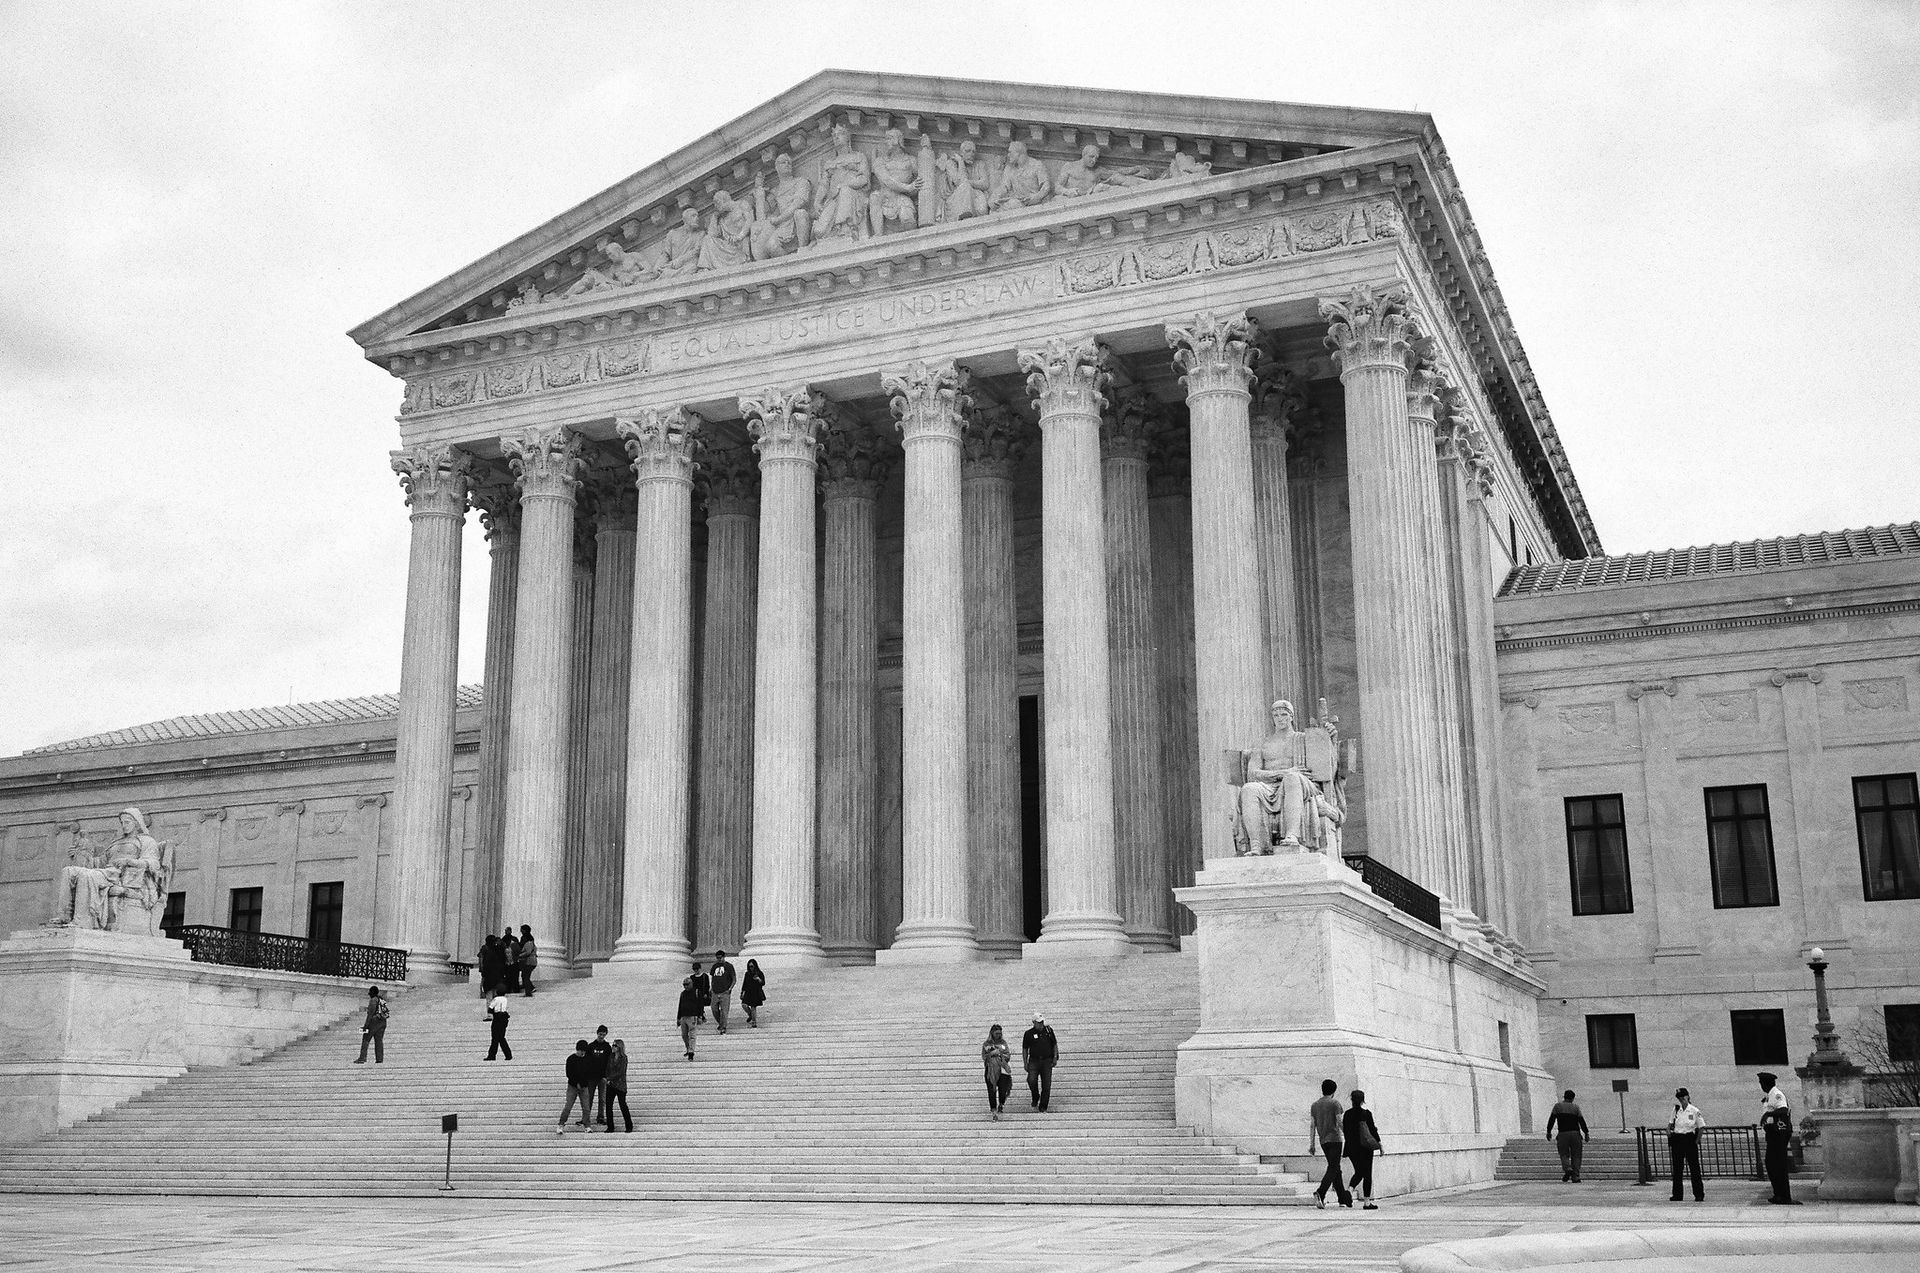 United States Supreme Court: Image Courtesy of Glenn Beltz on Flickr